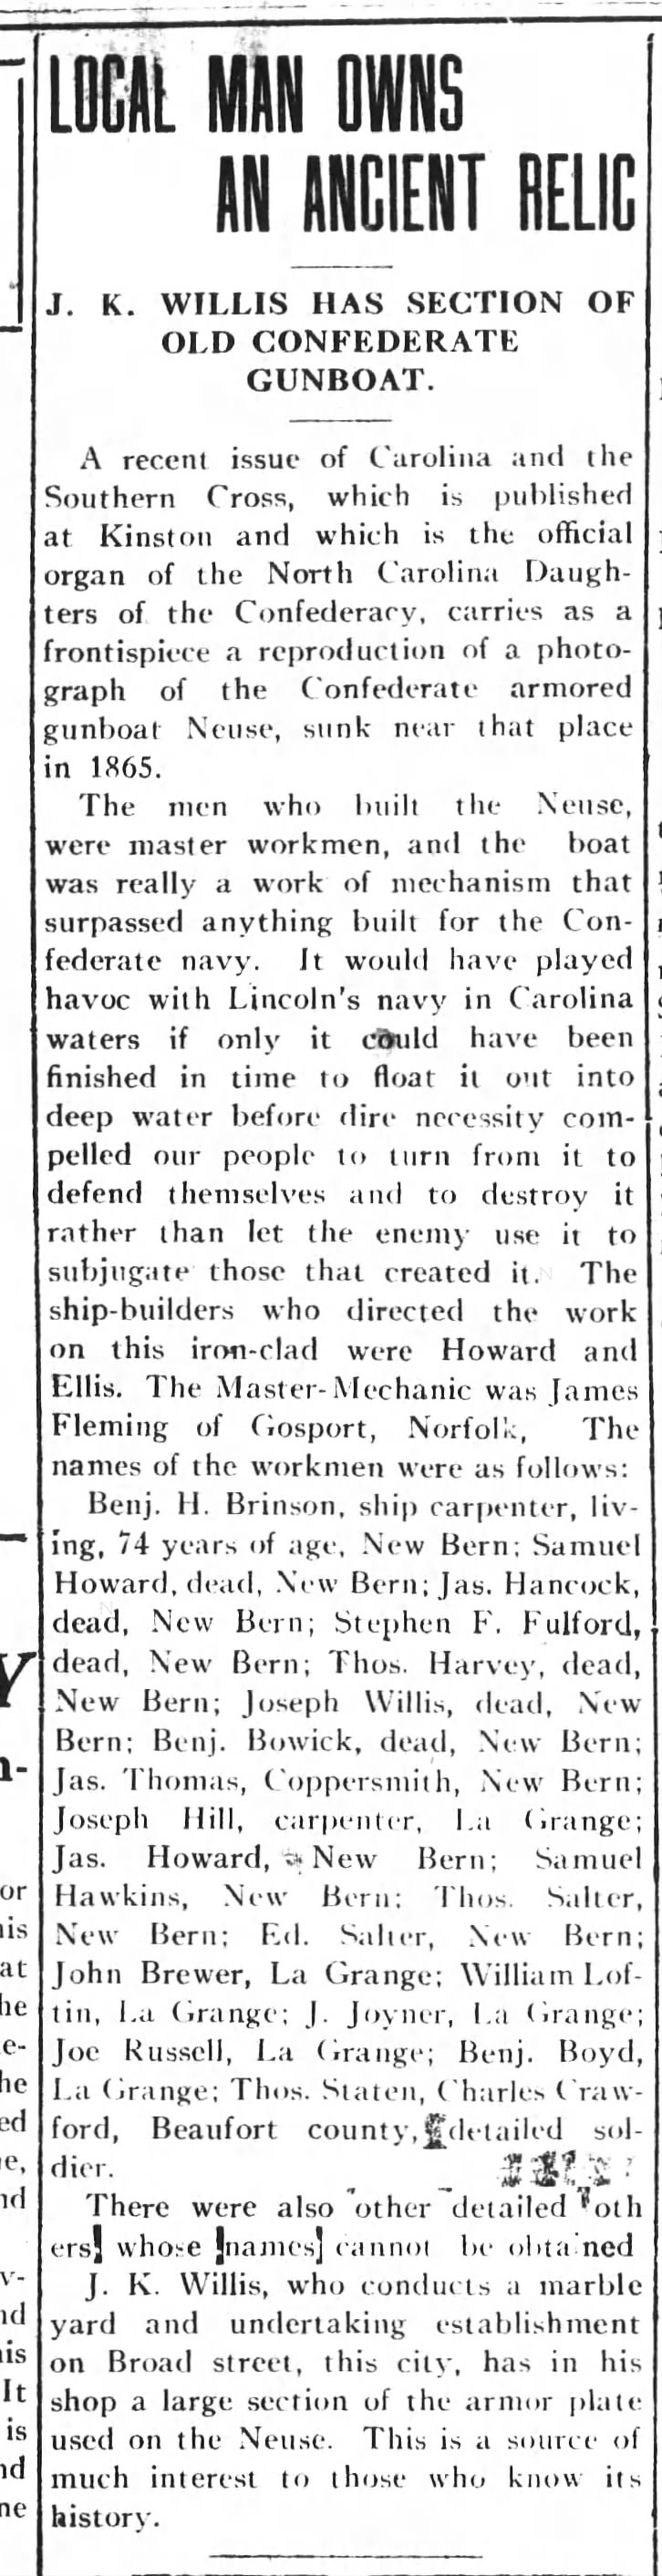 Craven Co, New Bern, NC, 11 Jan 1914, "Neuse" Gunboat Relic.